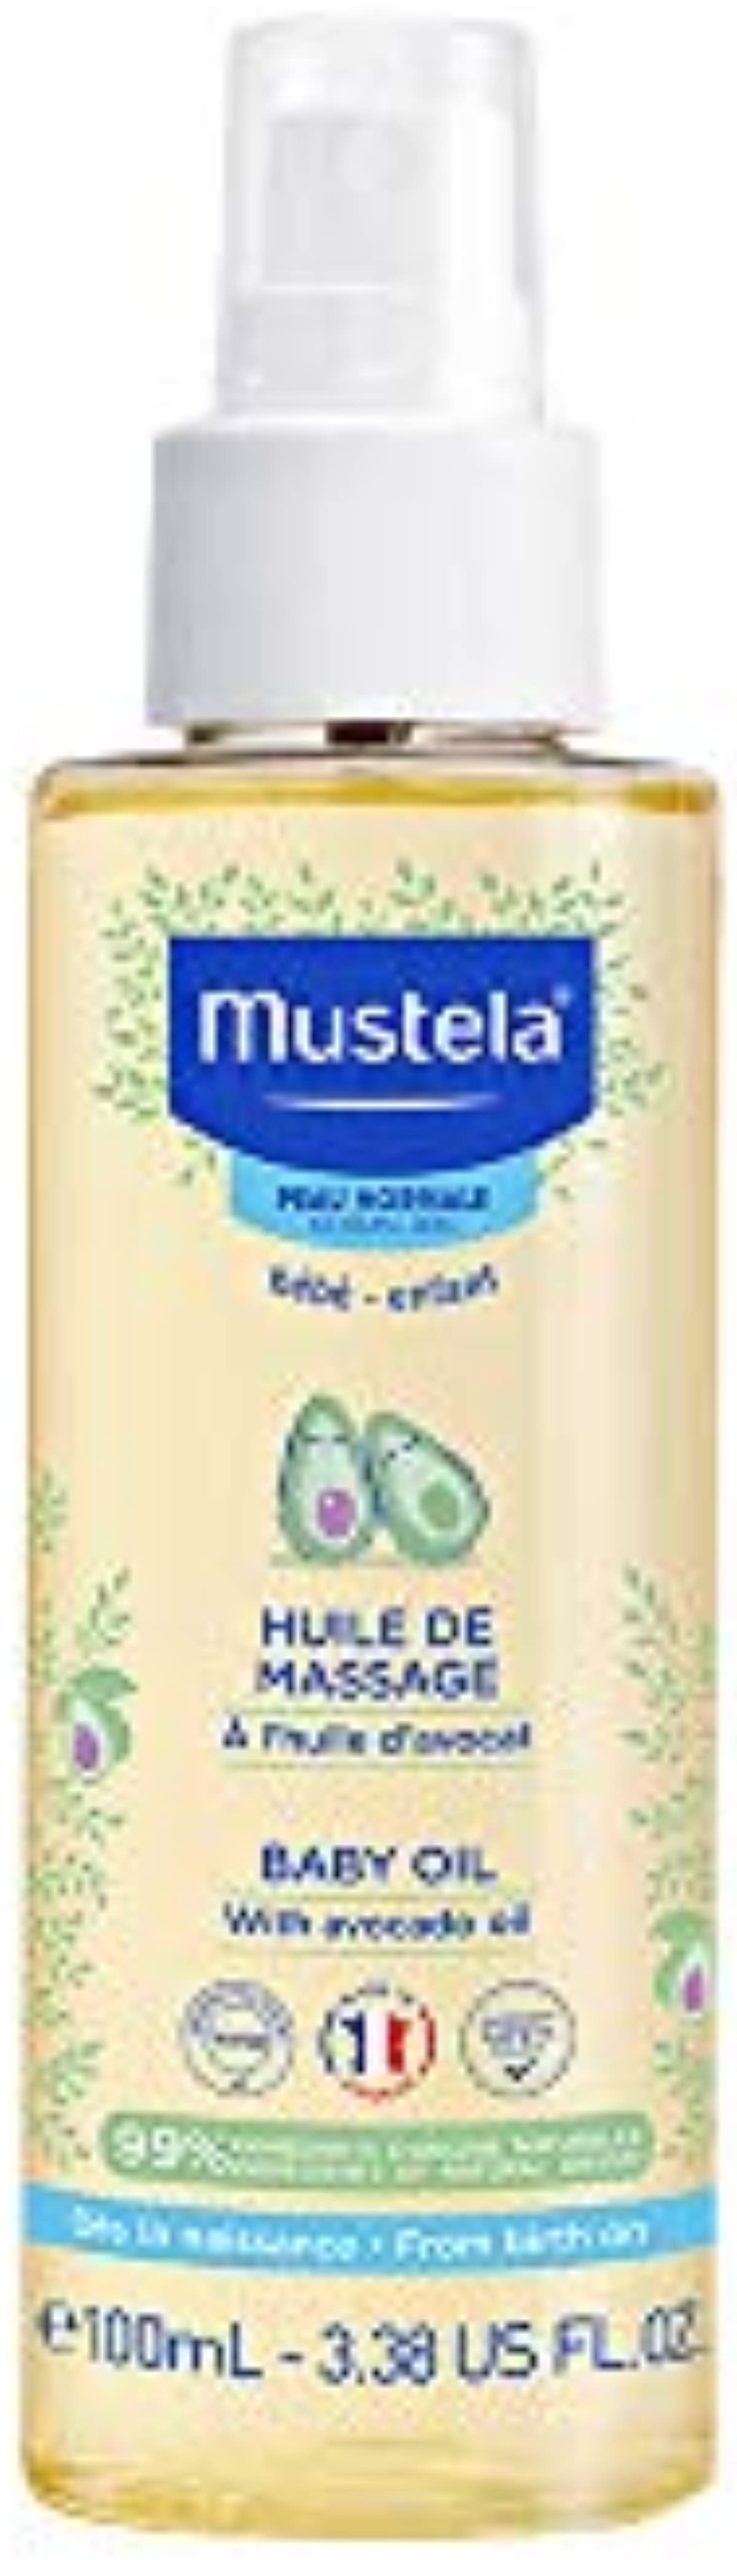 Mustela Baby Oil - Moisturizing Oil for Massage - with Natural Avocado, Pomegranate & Sunflower Oil - 3.38 fl. Oz